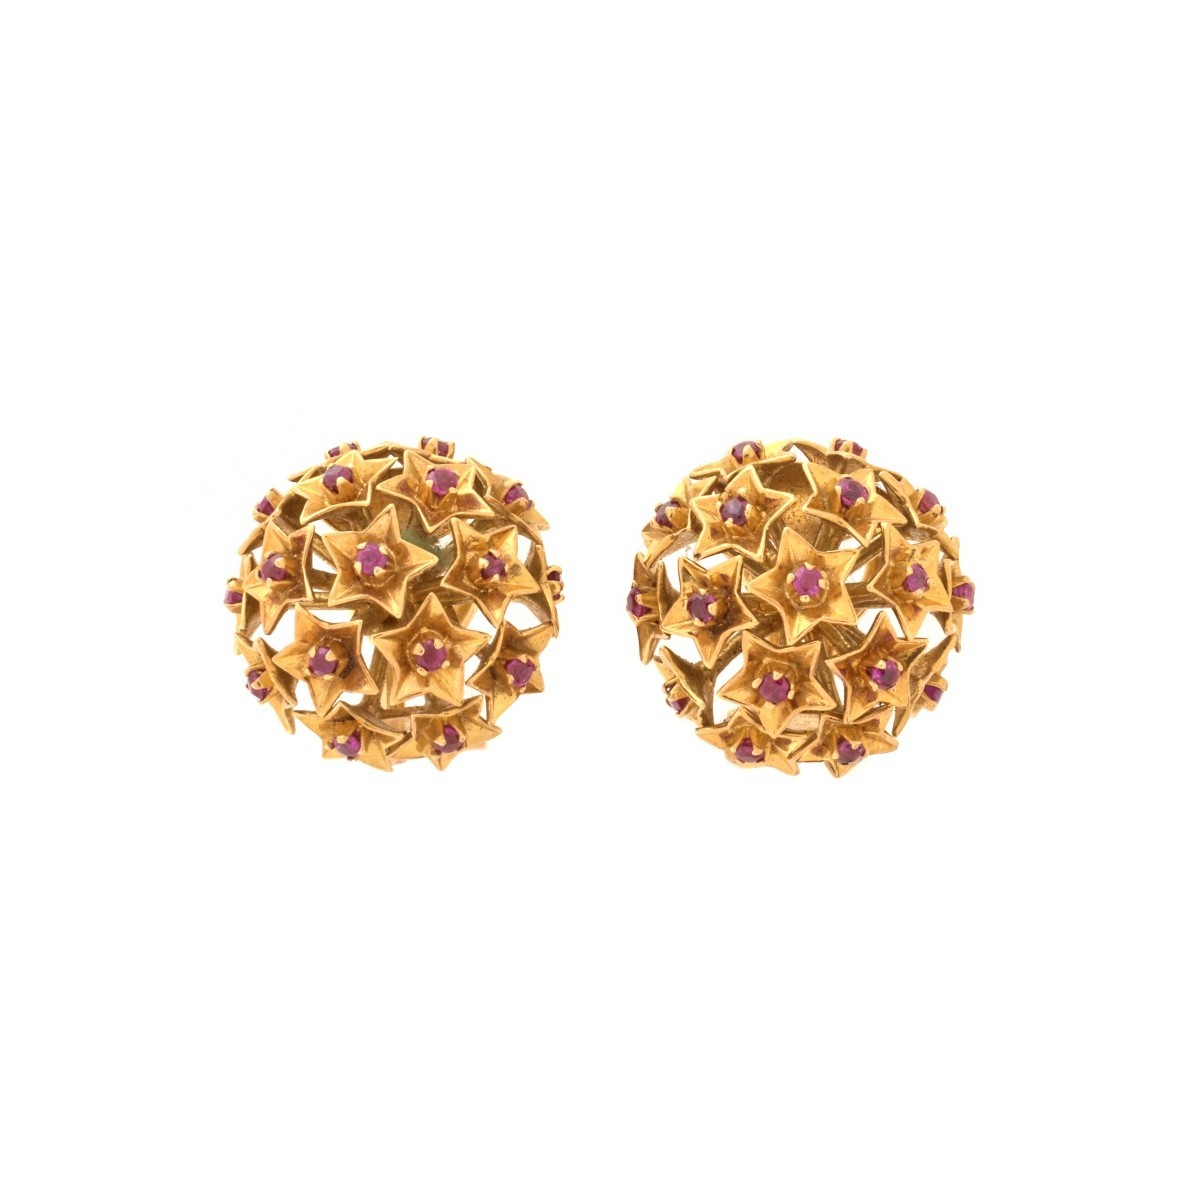 Tiffany & Co Ruby and 18K Earrings